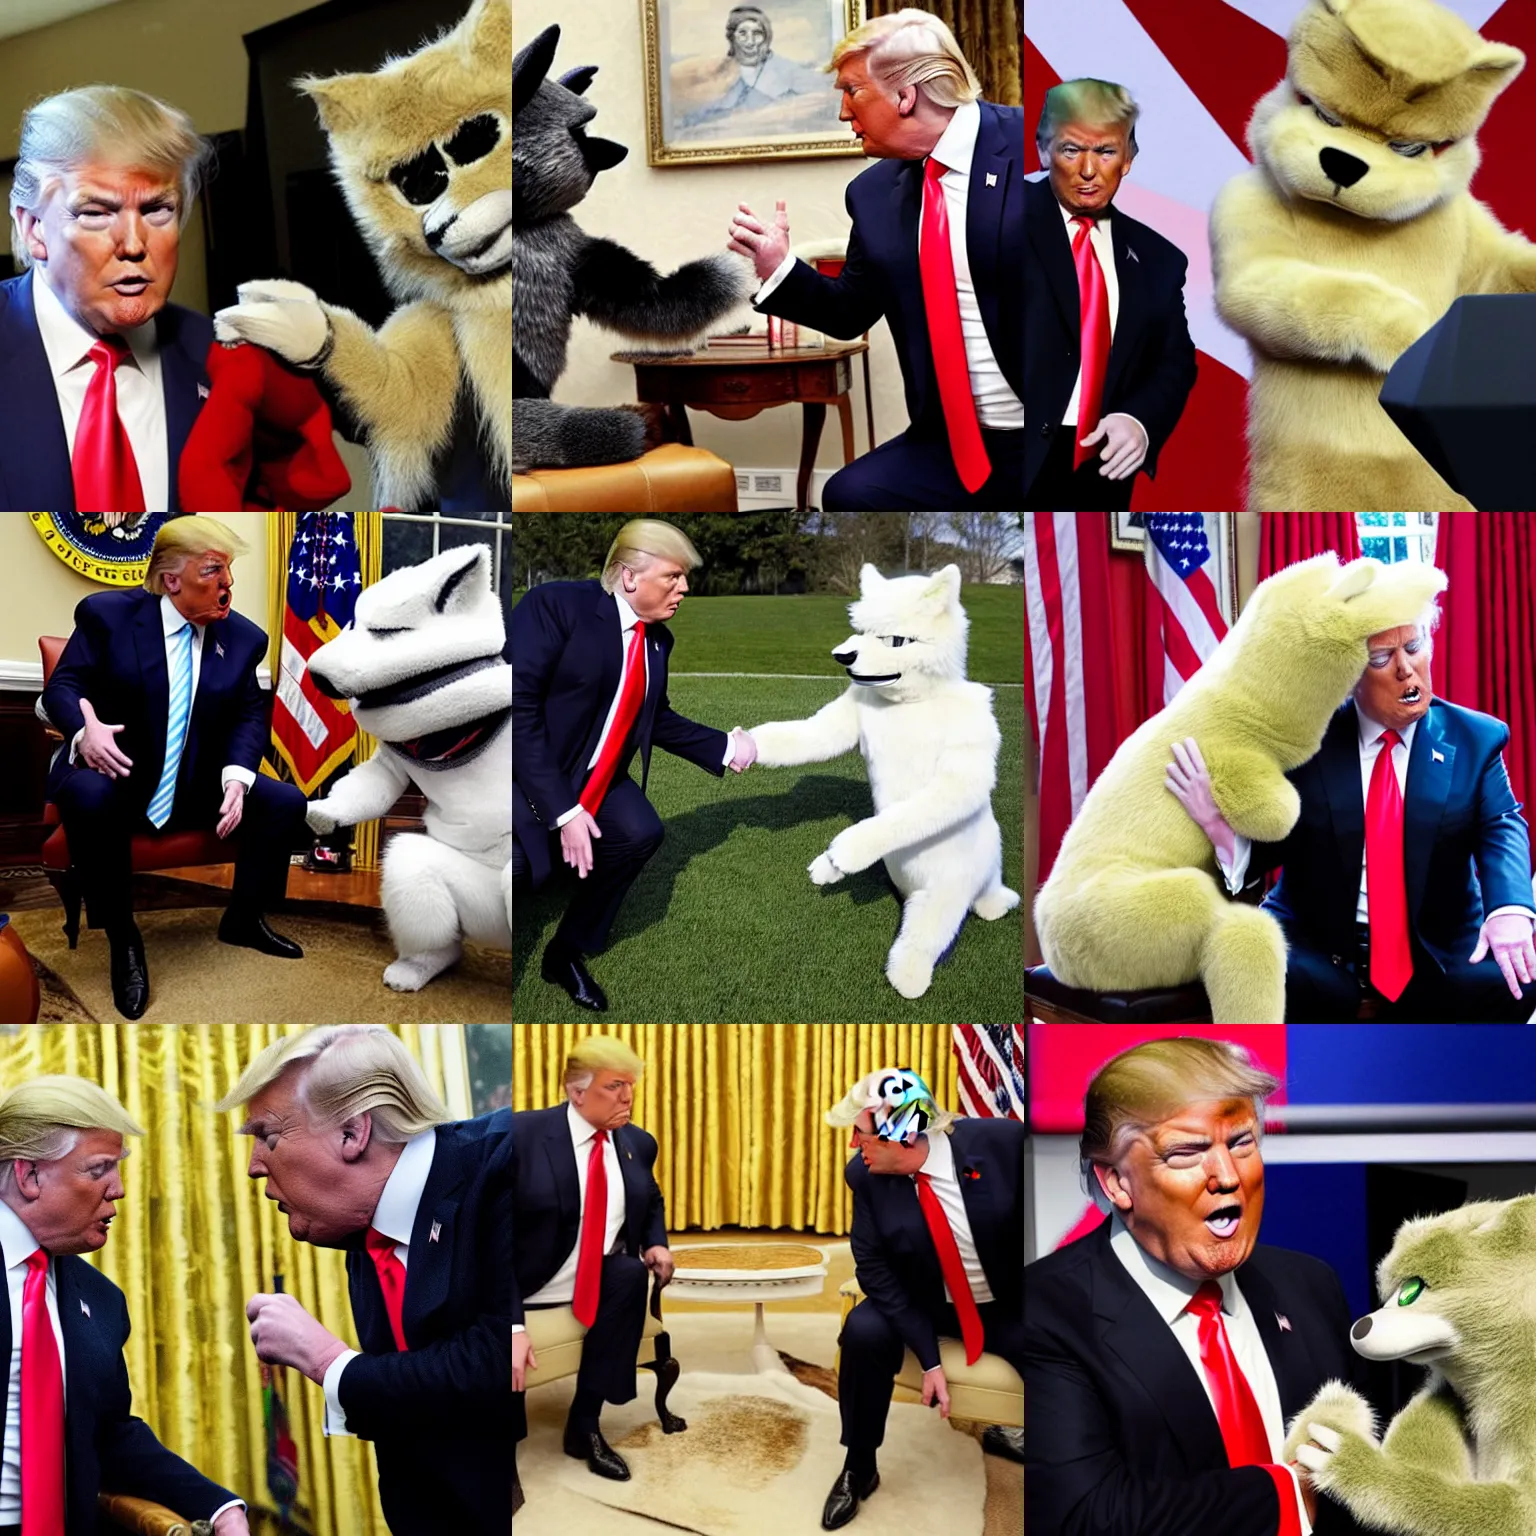 Prompt: Donald trump meeting a furry, AP Photo 2016